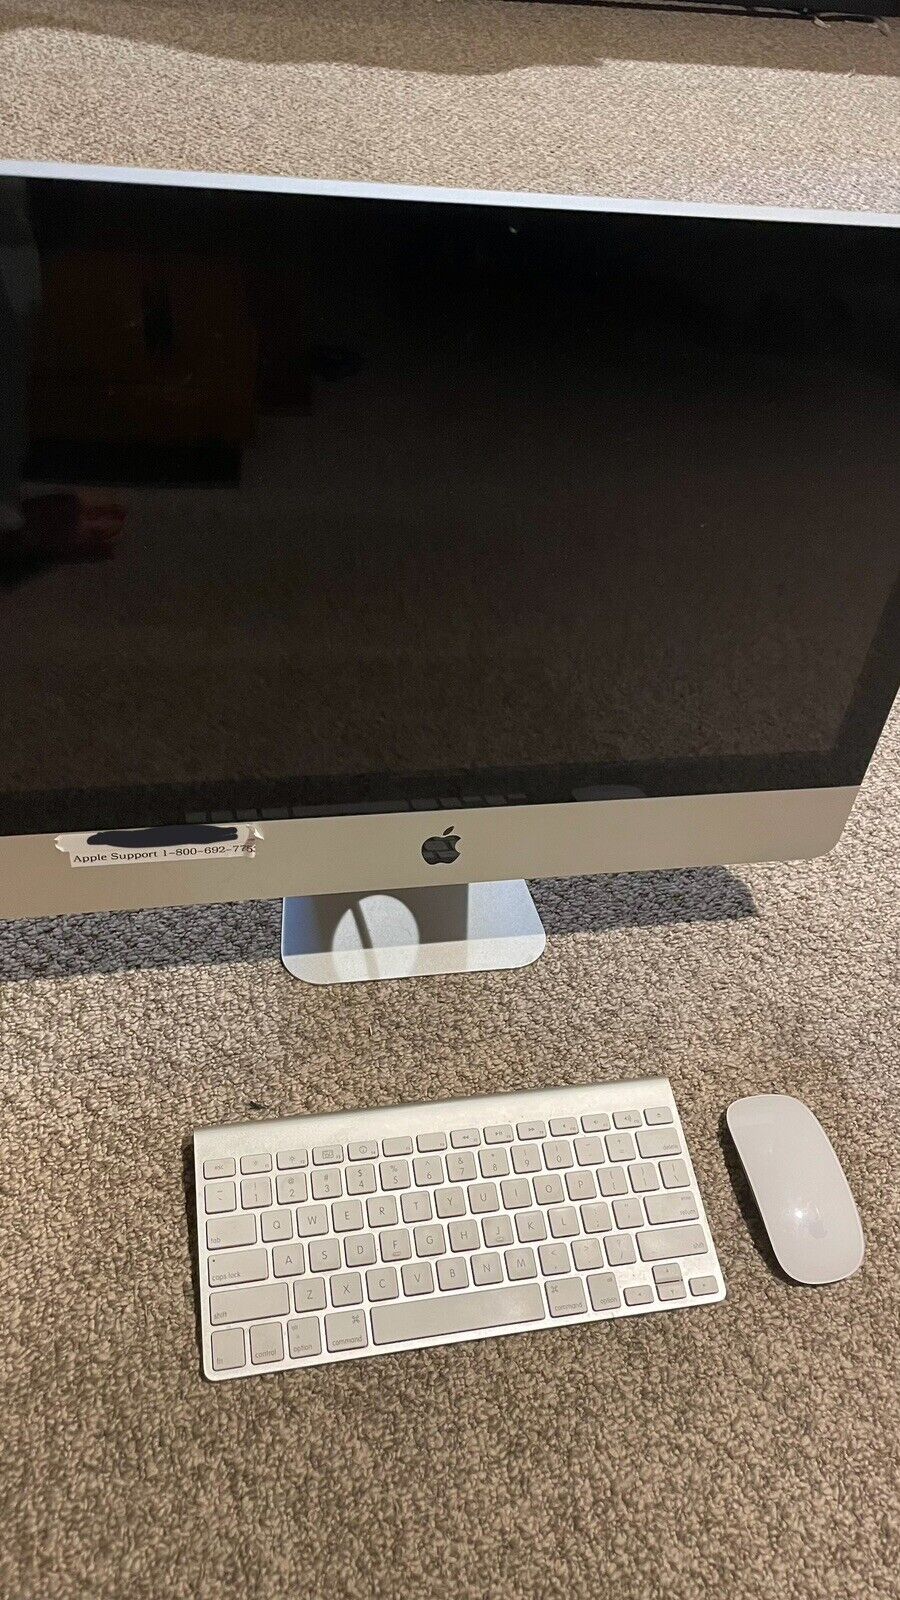 27” Apple iMac 2009 Computer, Magic Mouse, Keyboard, Original Box Can Play Games